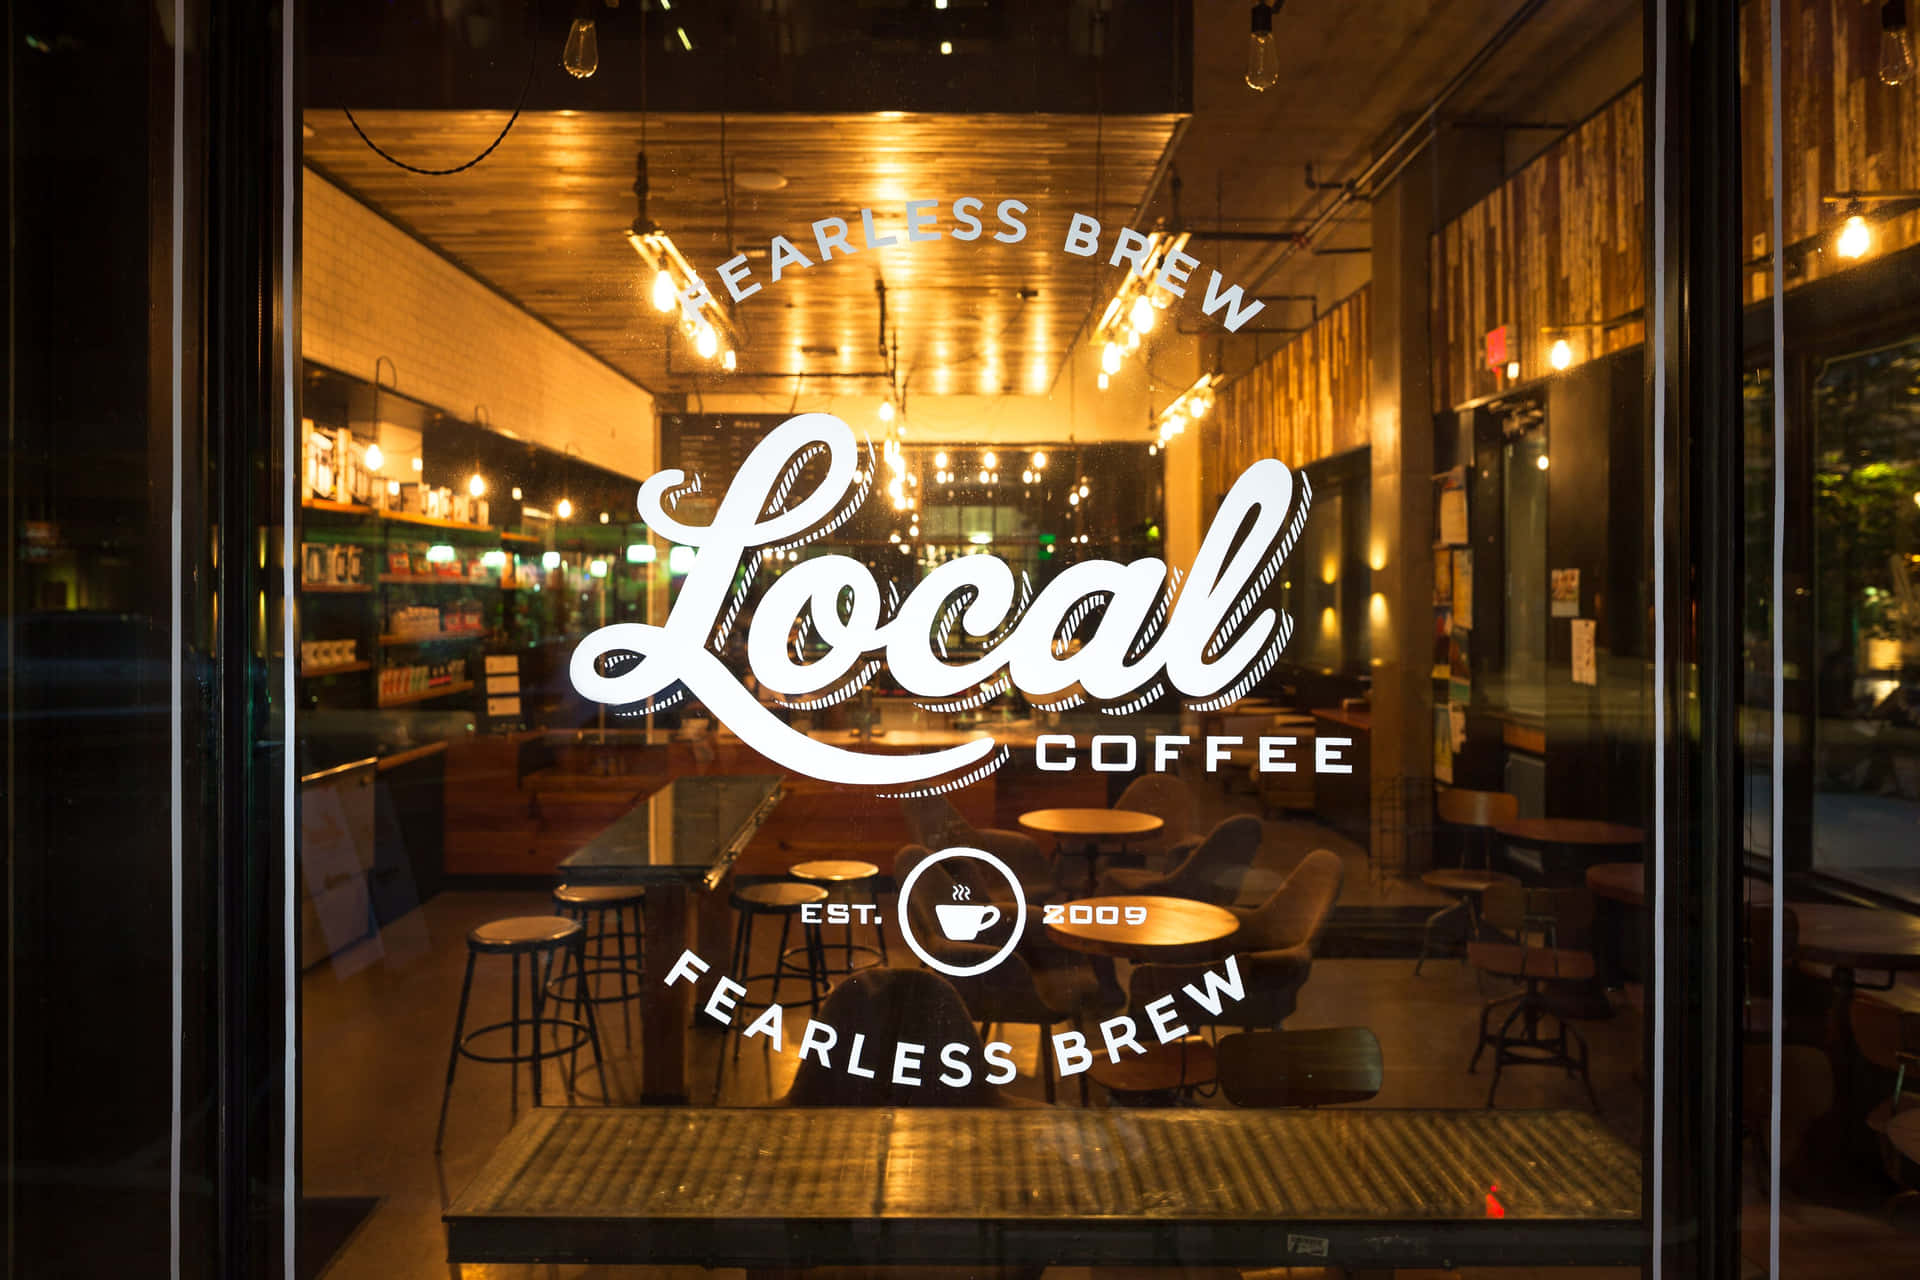 Local Coffee - A Local Coffee Shop